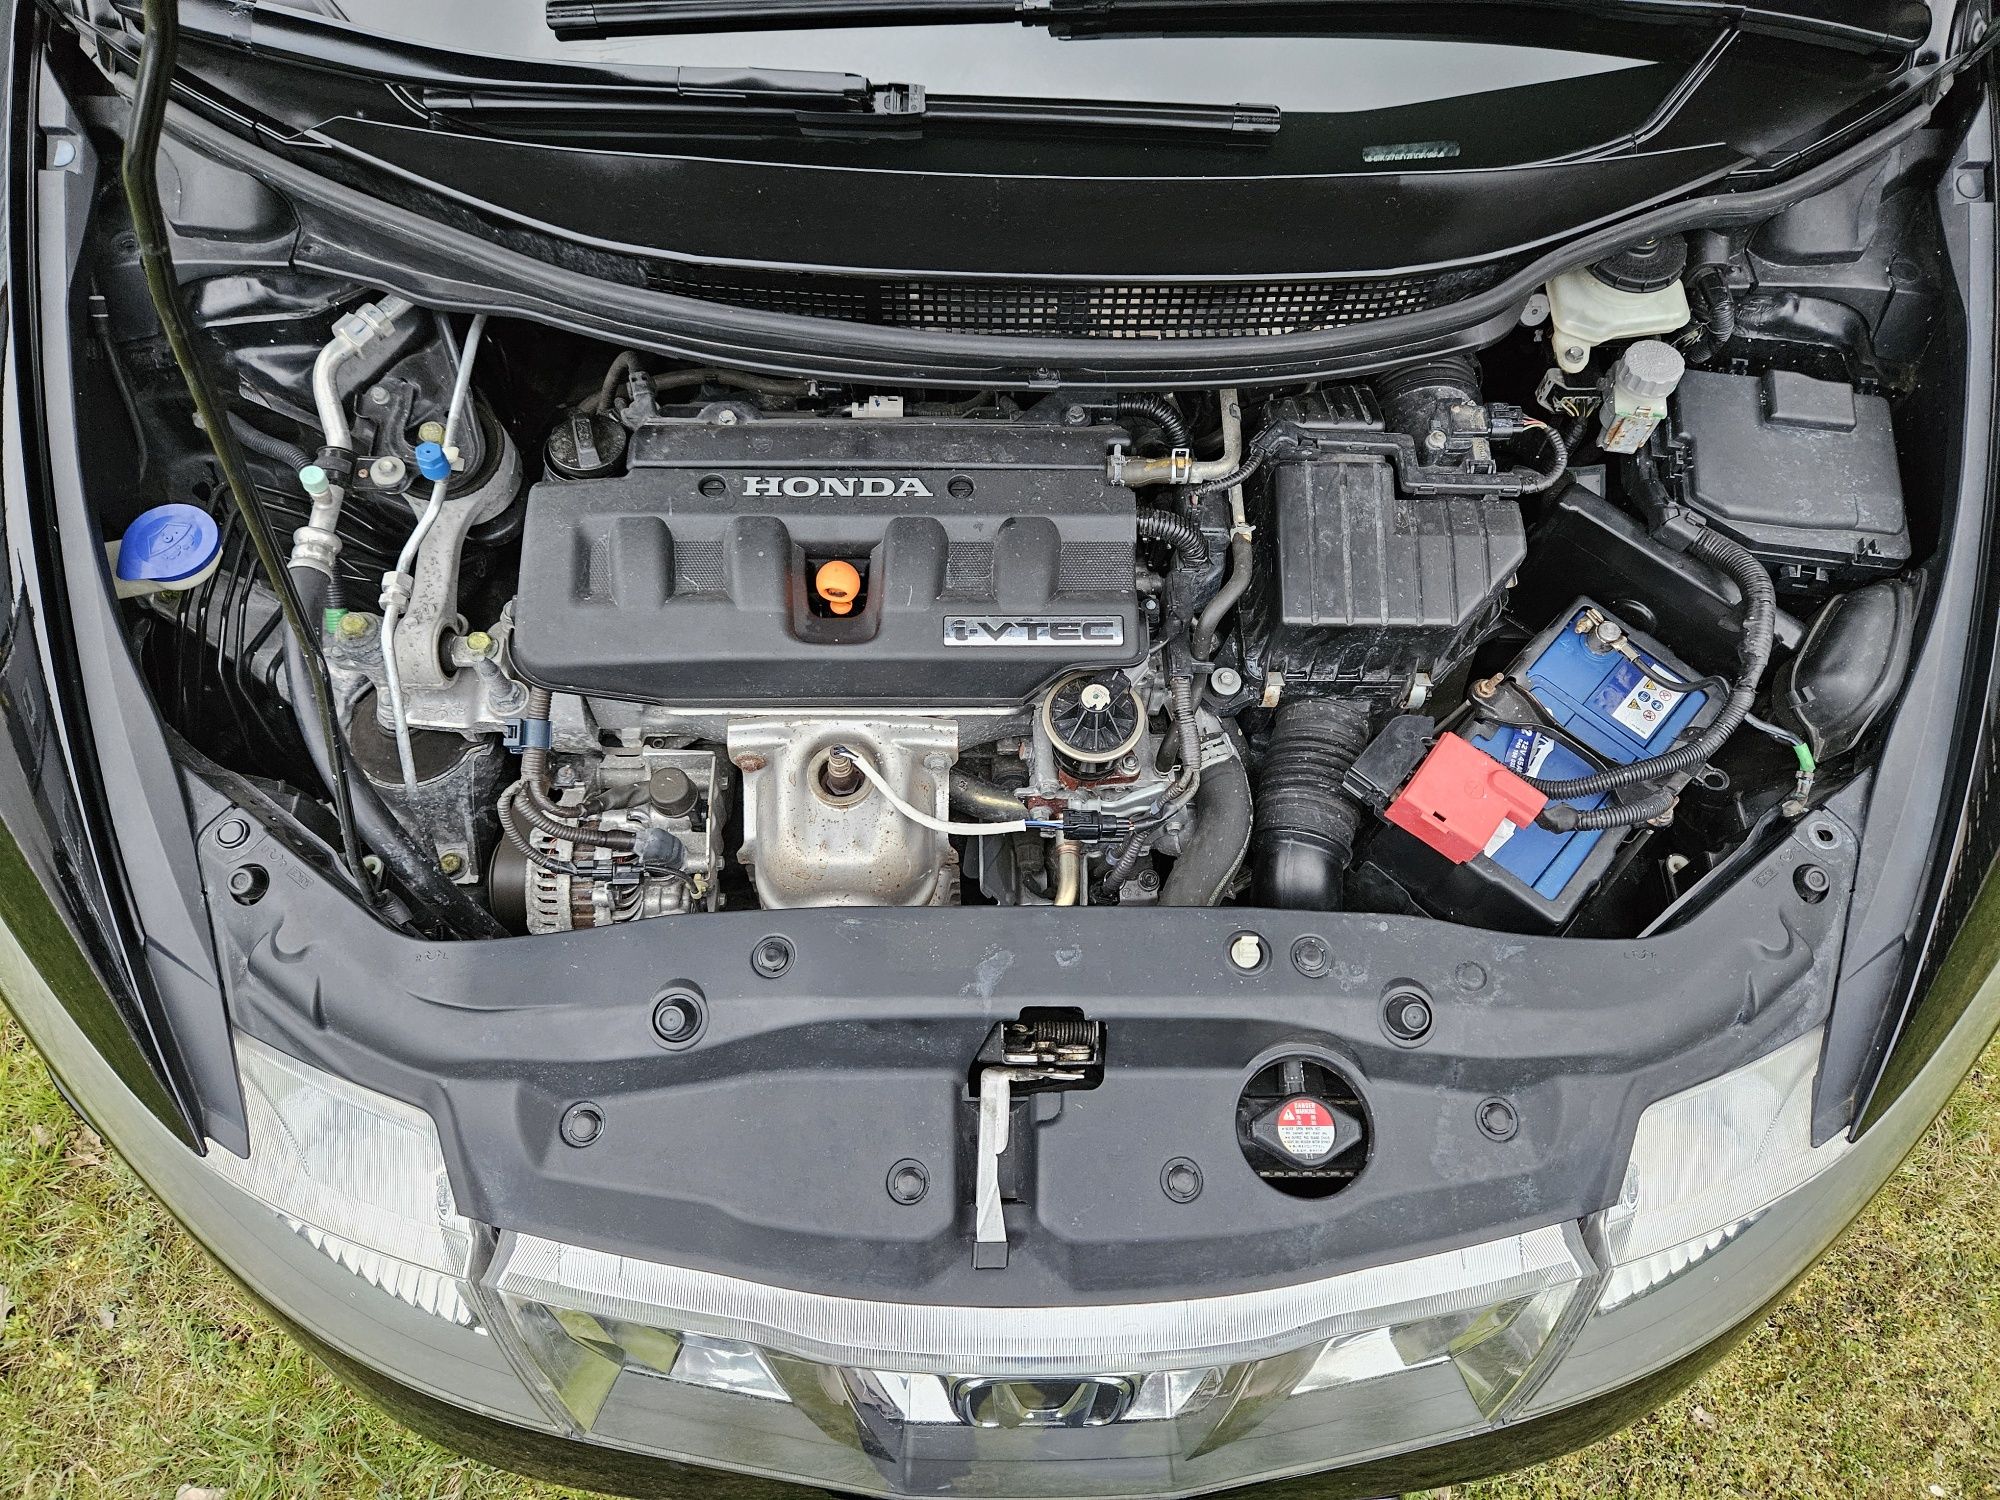 Honda Civic VIII 1.8 Czarna Zadbana